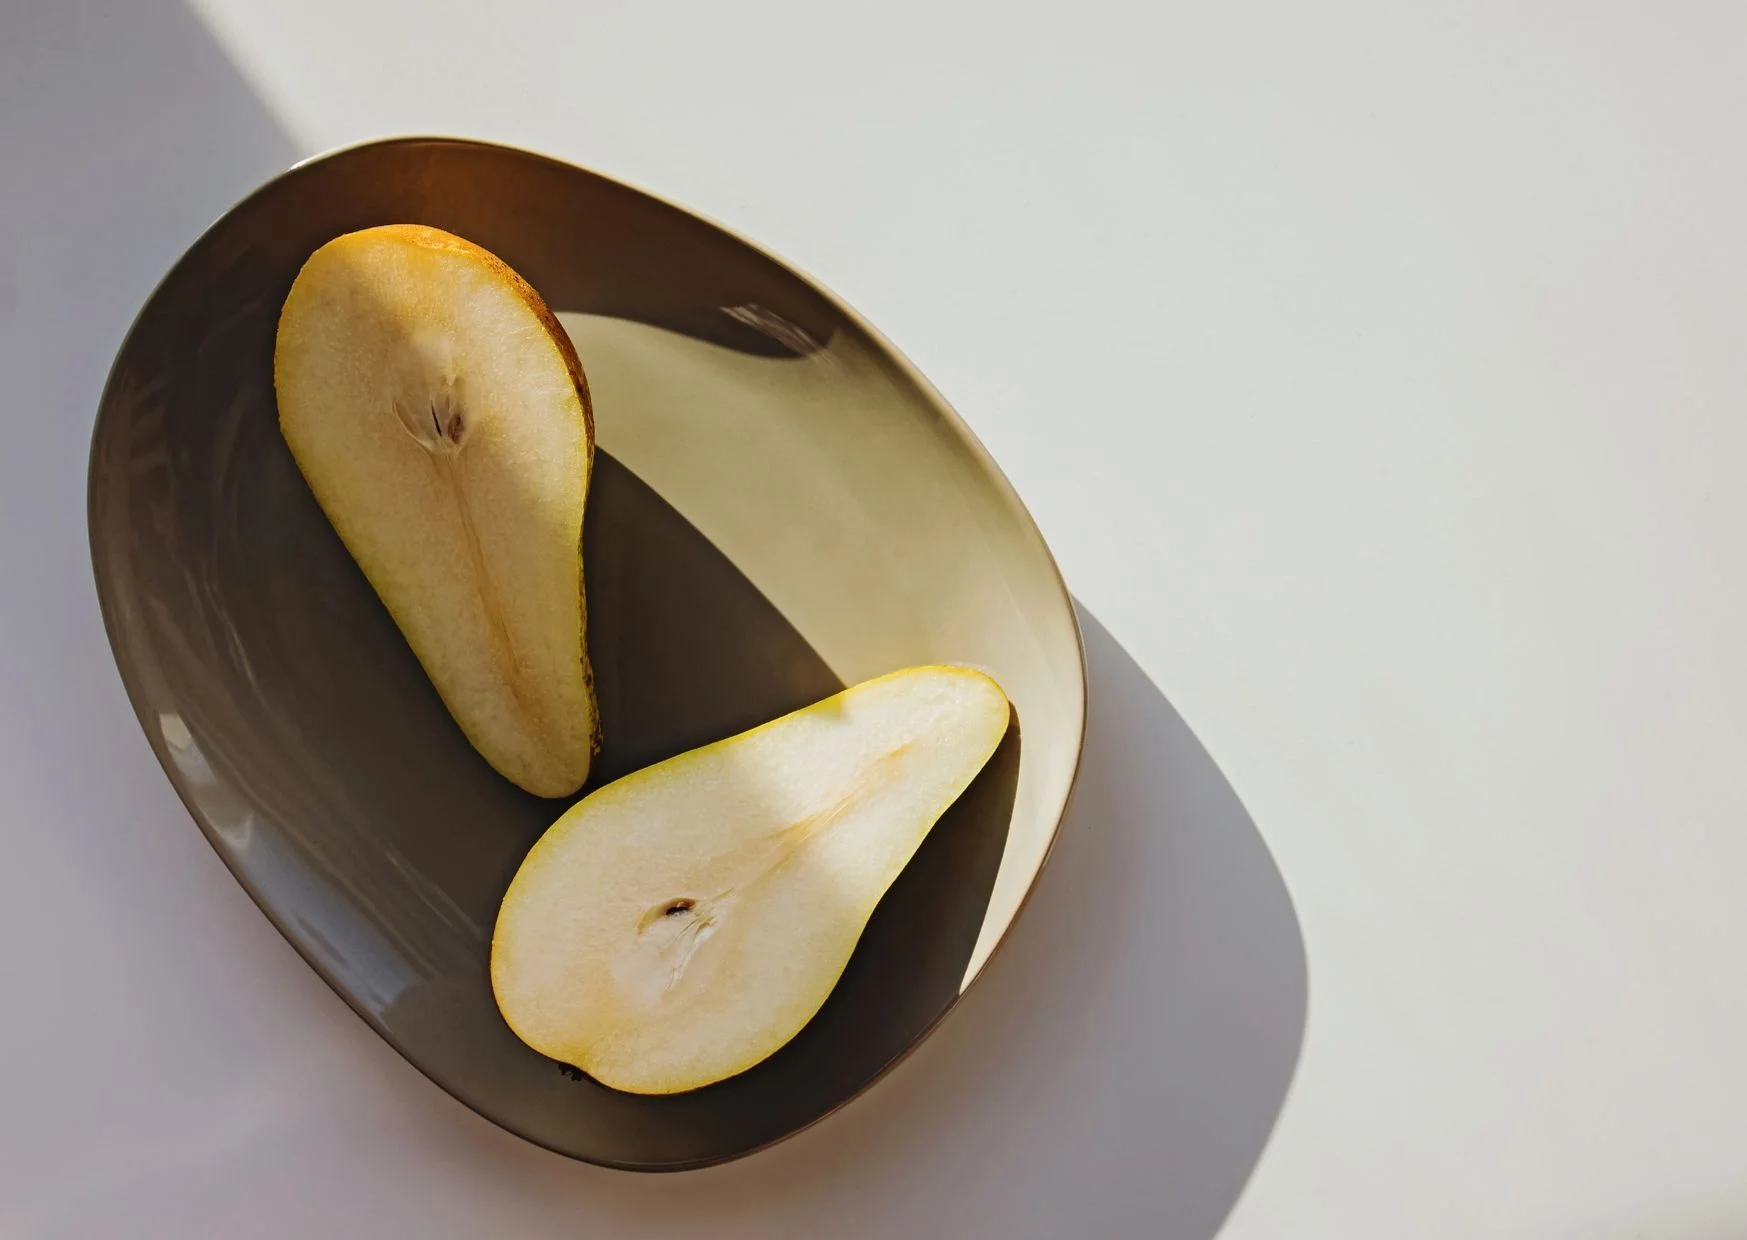 Pear Fruit Cut in Half on Plate